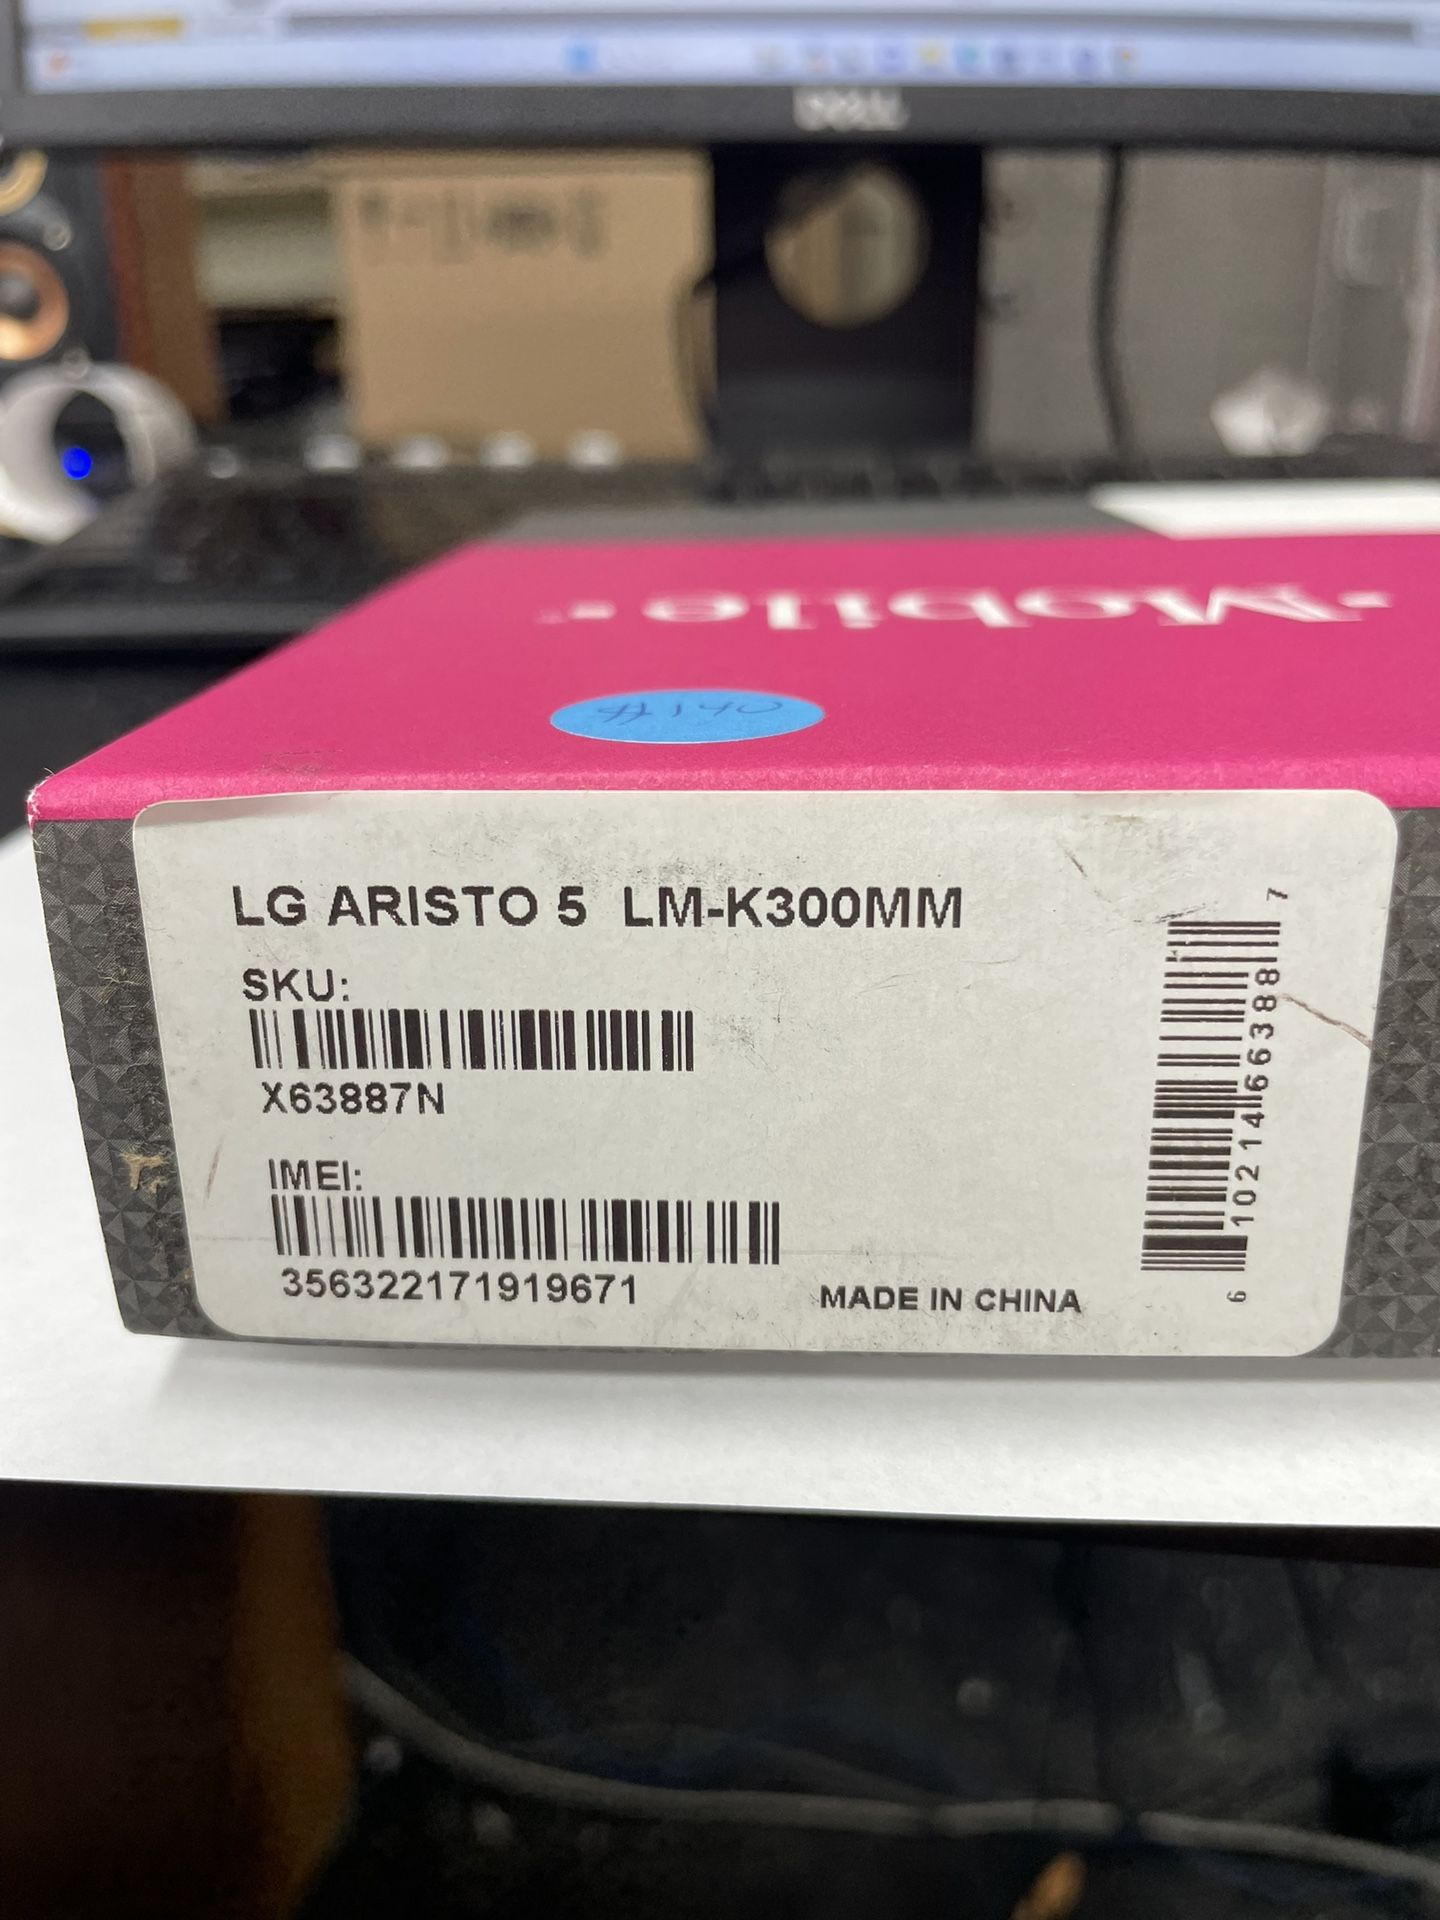 lg aristo 5 lm-k300mm unlocked cell phone new